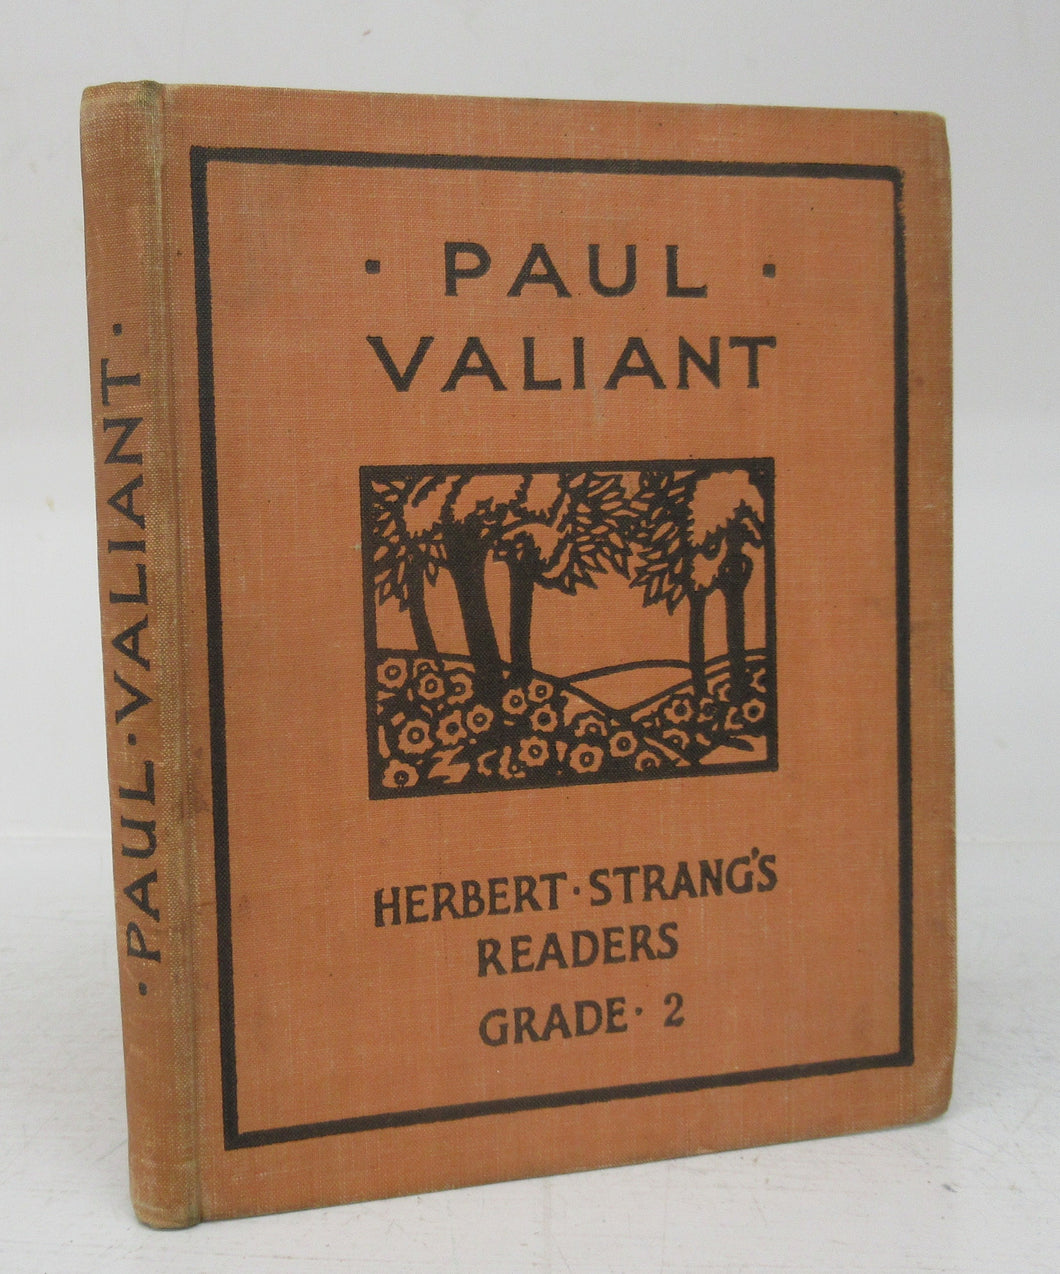 Paul Valiant